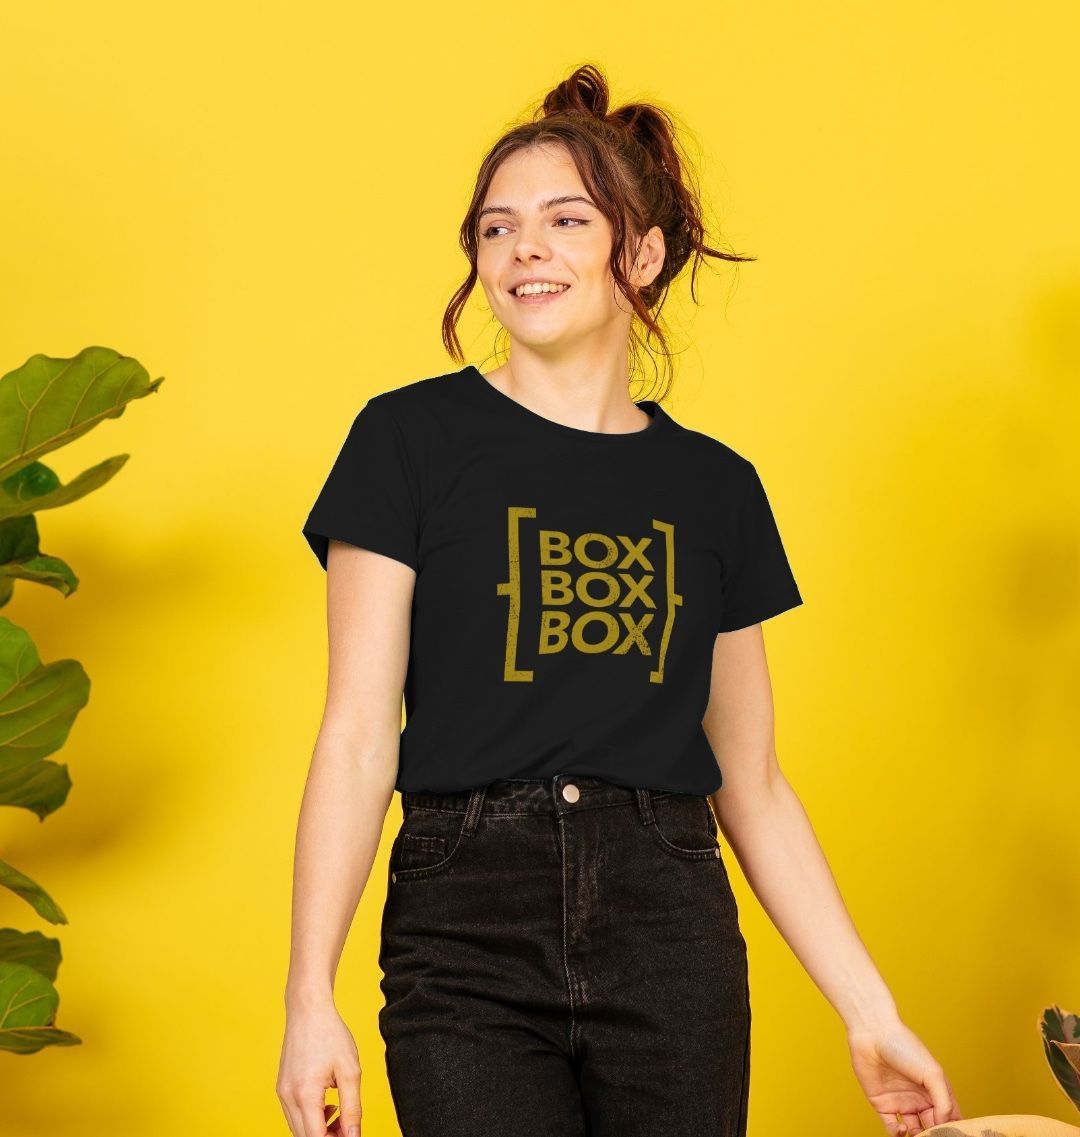 "Box Box Box" The T Shirt Women's Cut